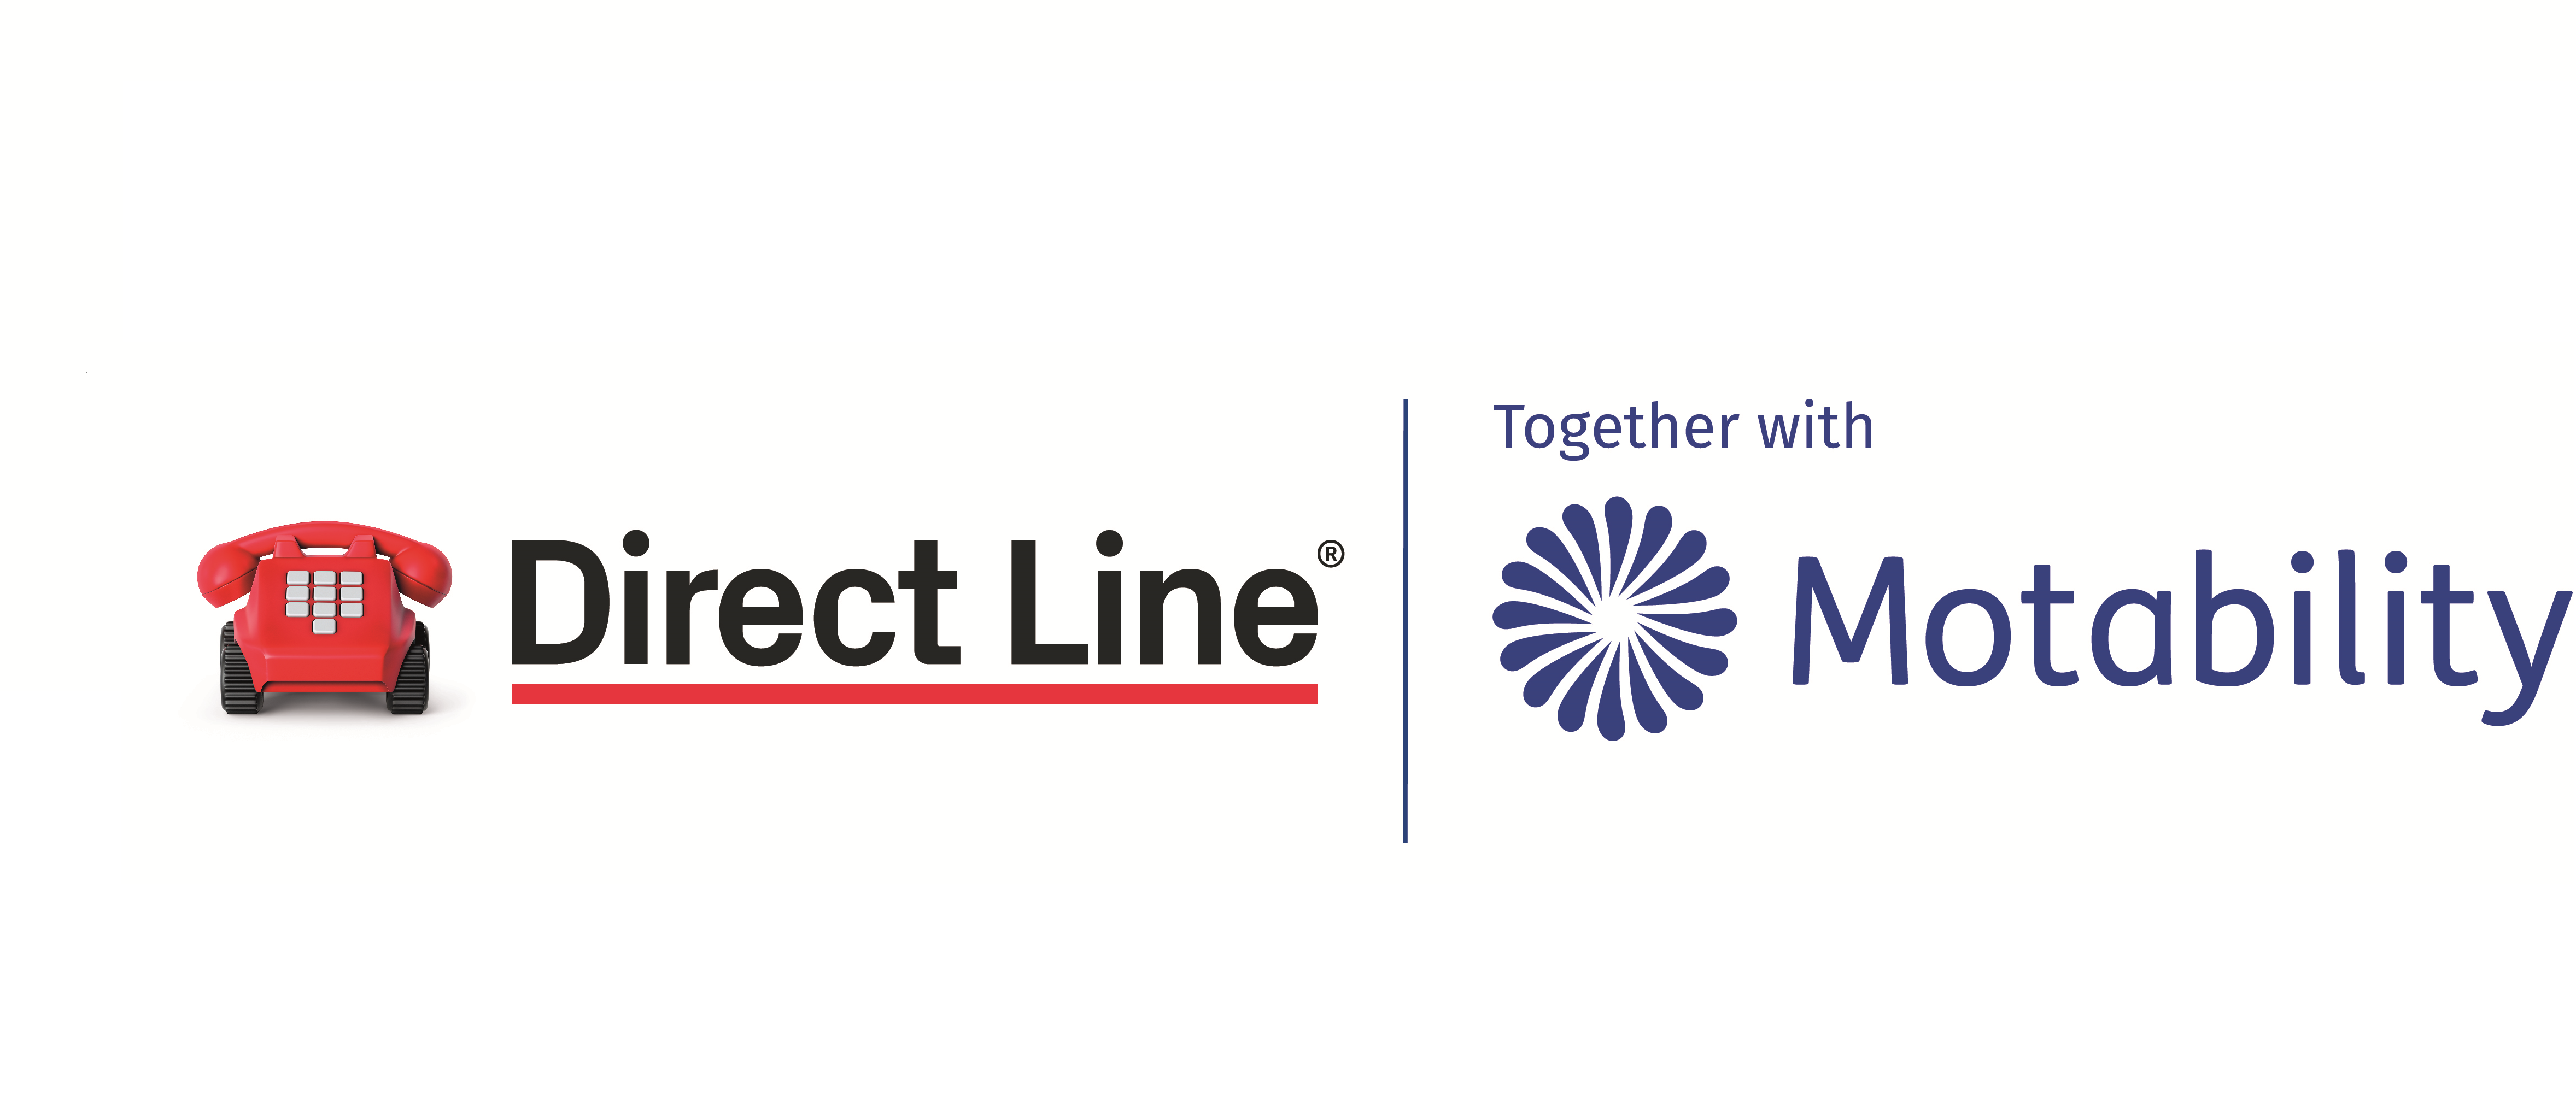 DirectLine together with Motability logo